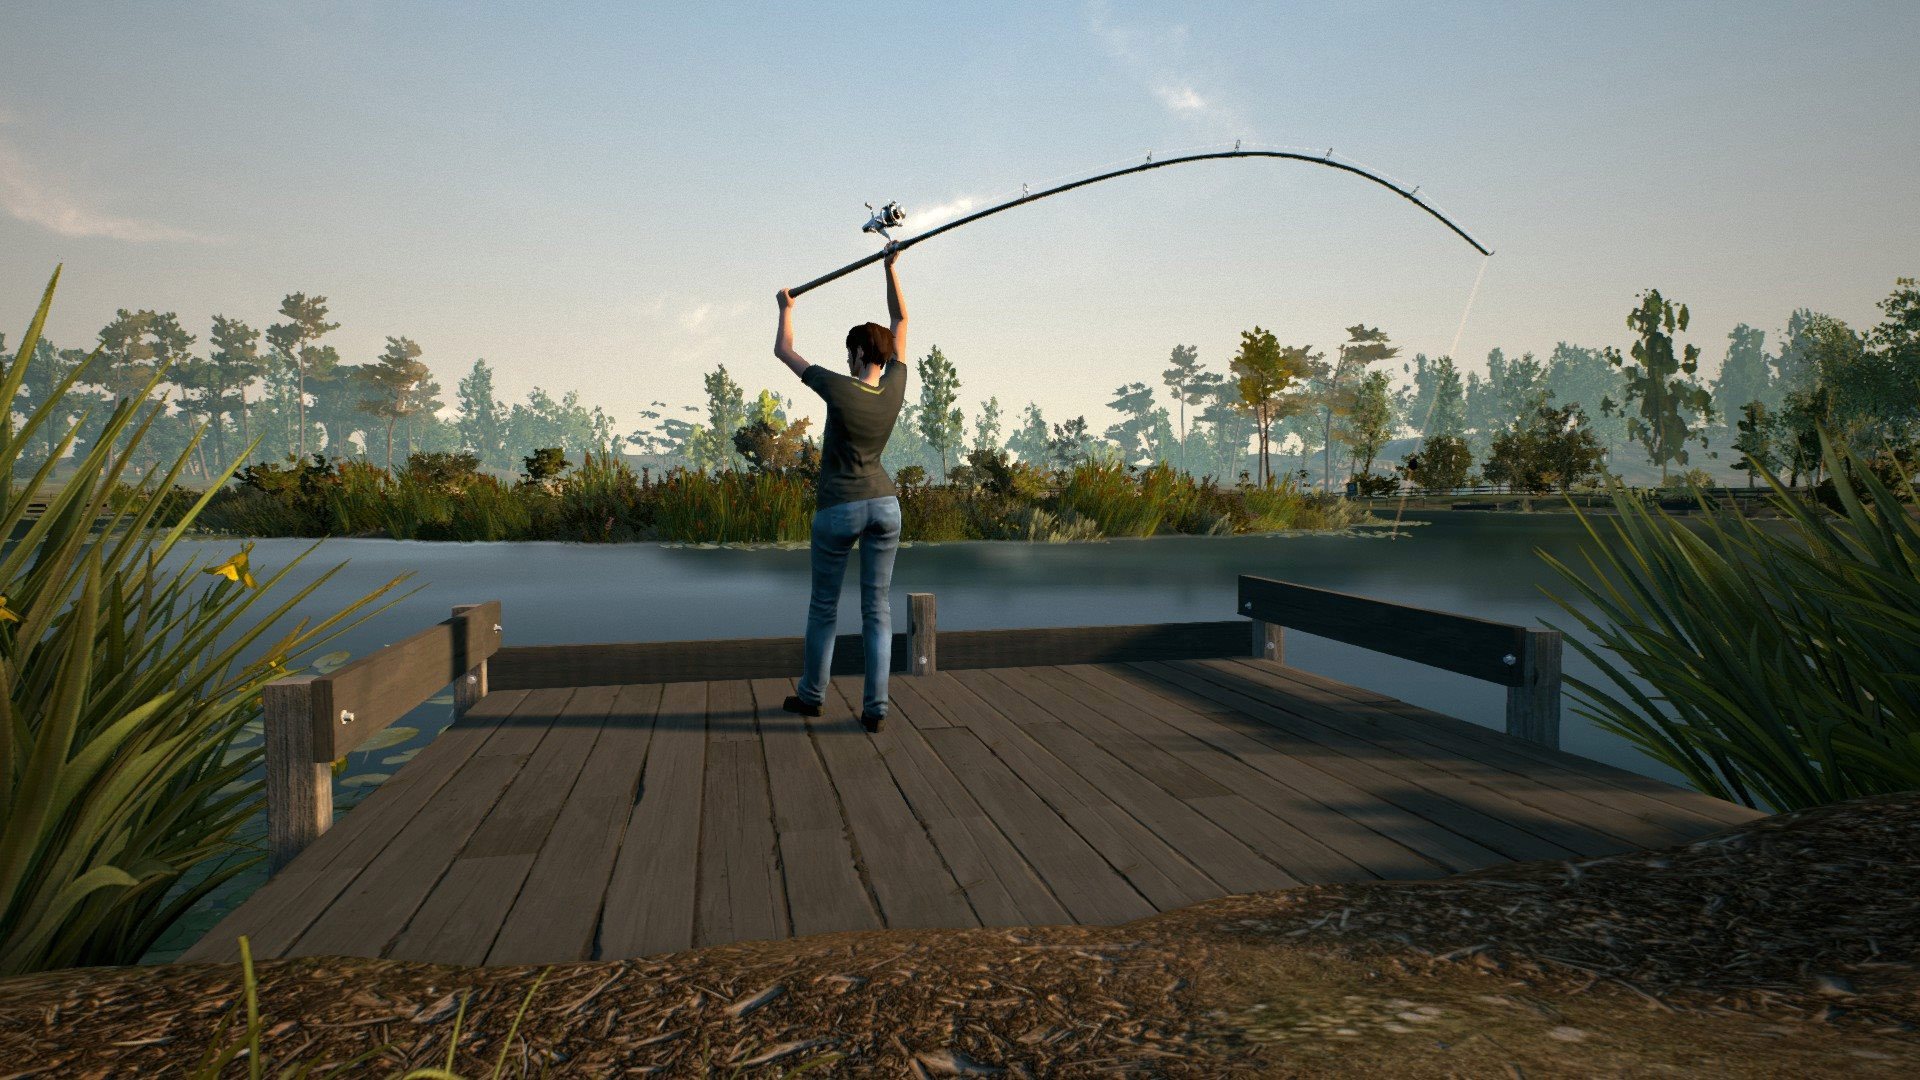 dovetail games fishing